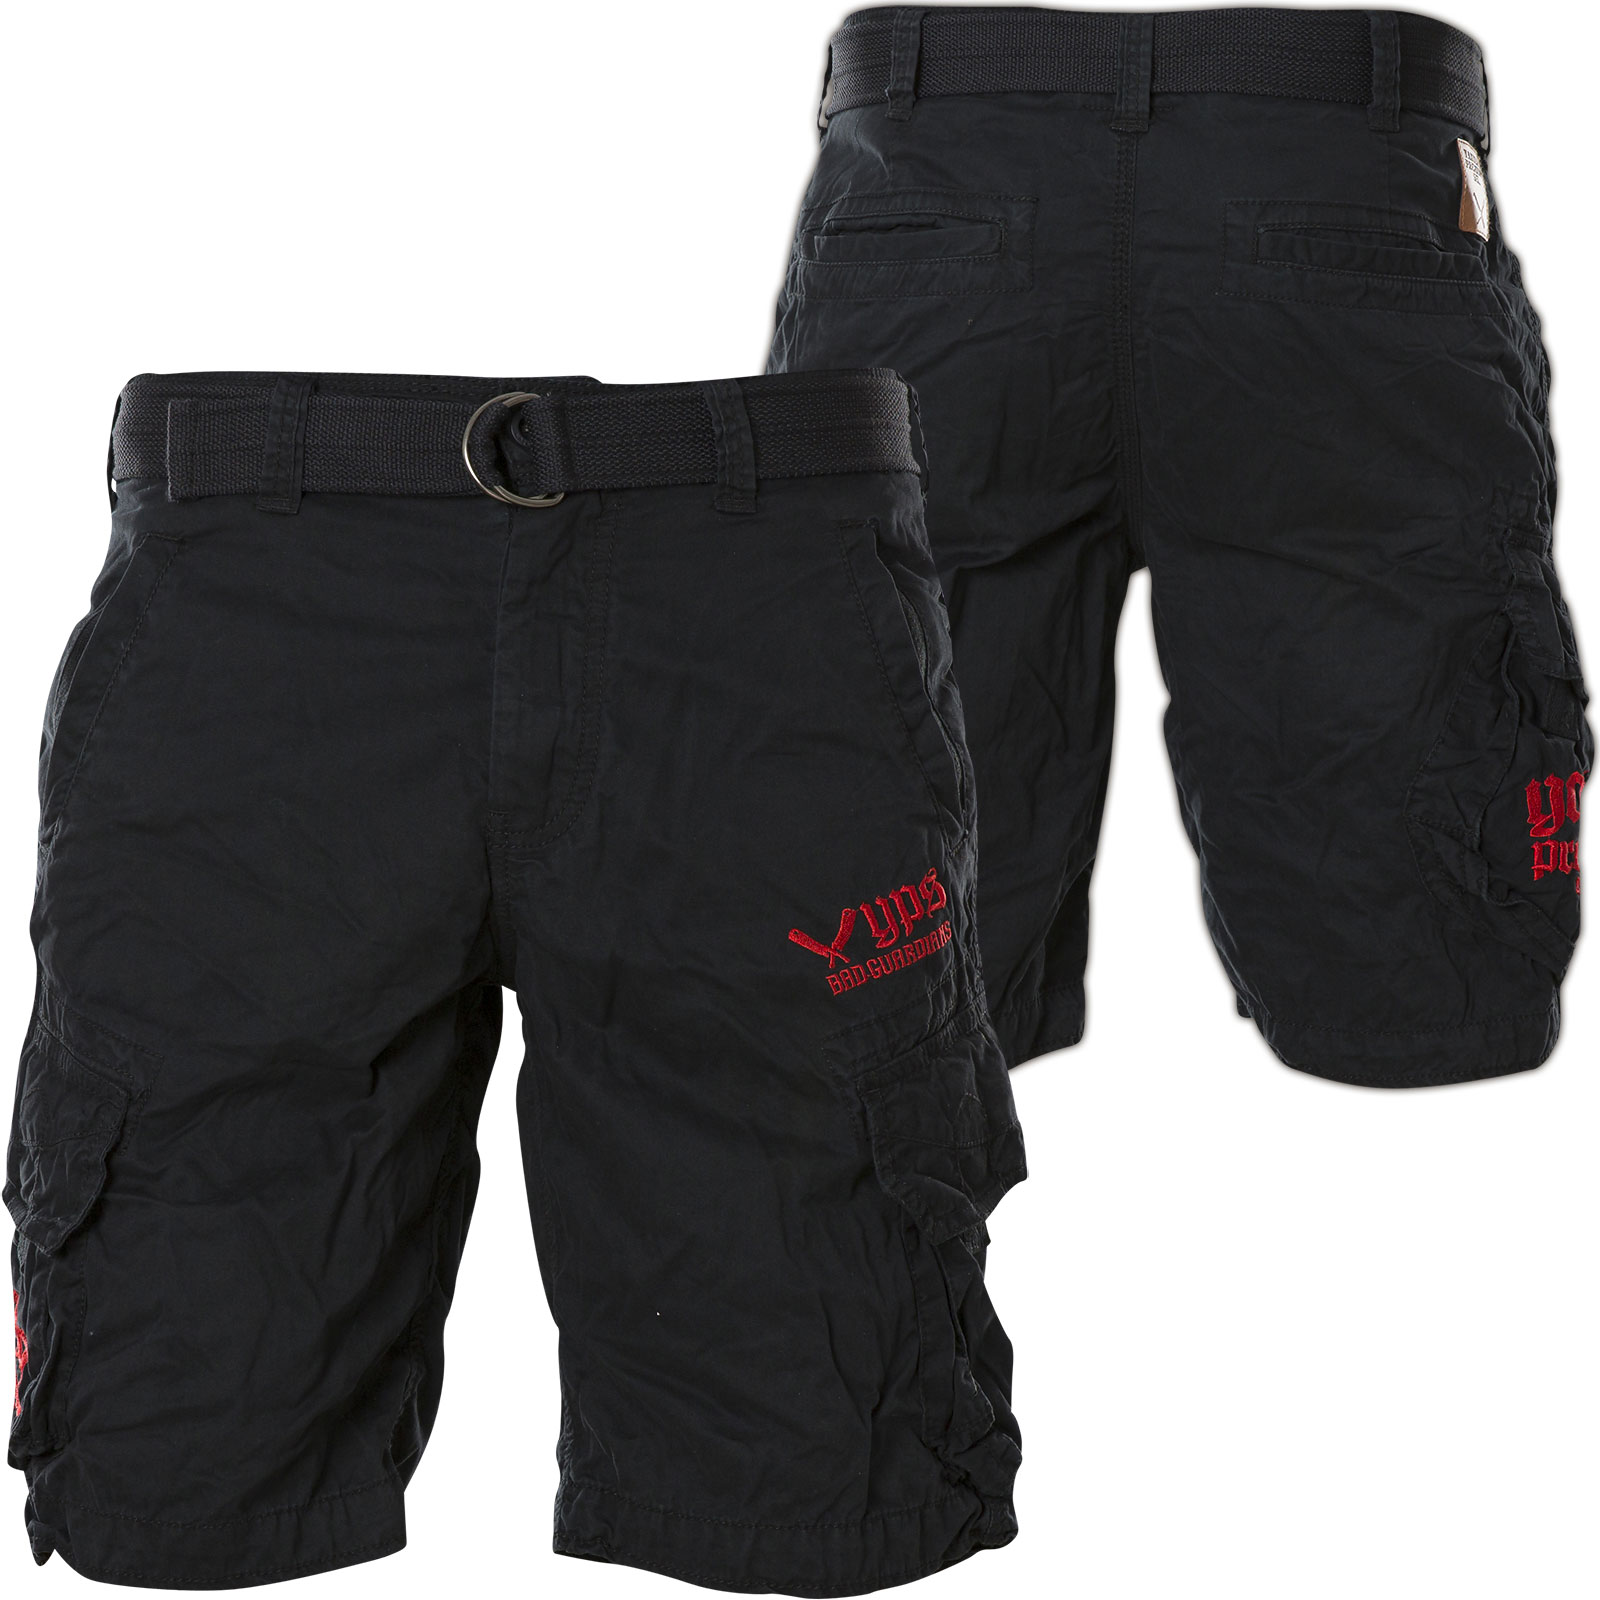 Yakuza Premium Shorts YPSH-2261 Navy with detailed embroidery